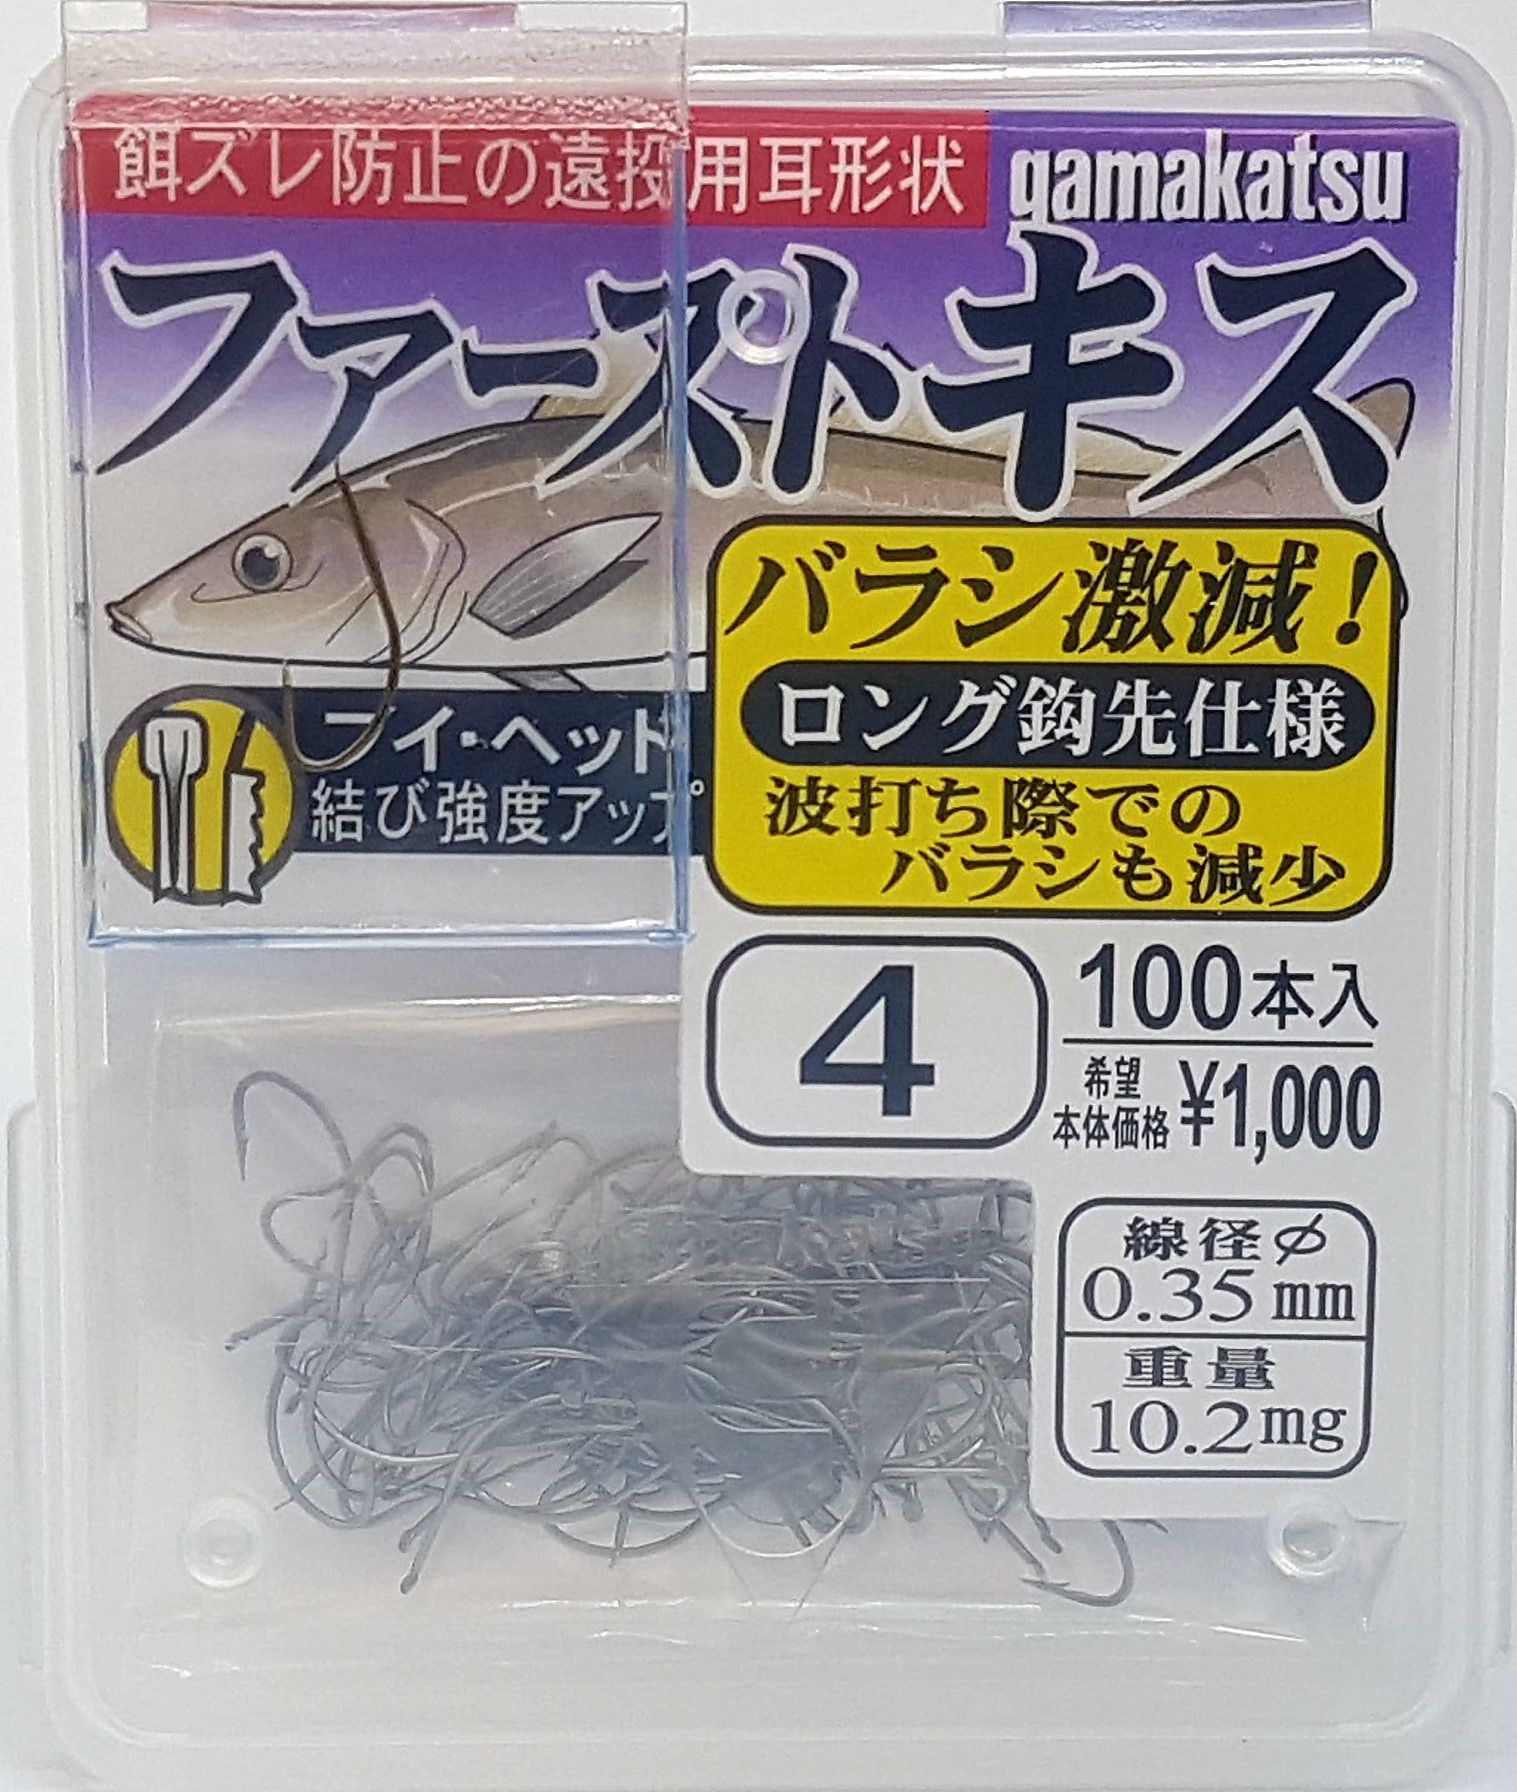 Anzol Gamakatsu First Kissu - Marlim Pesca